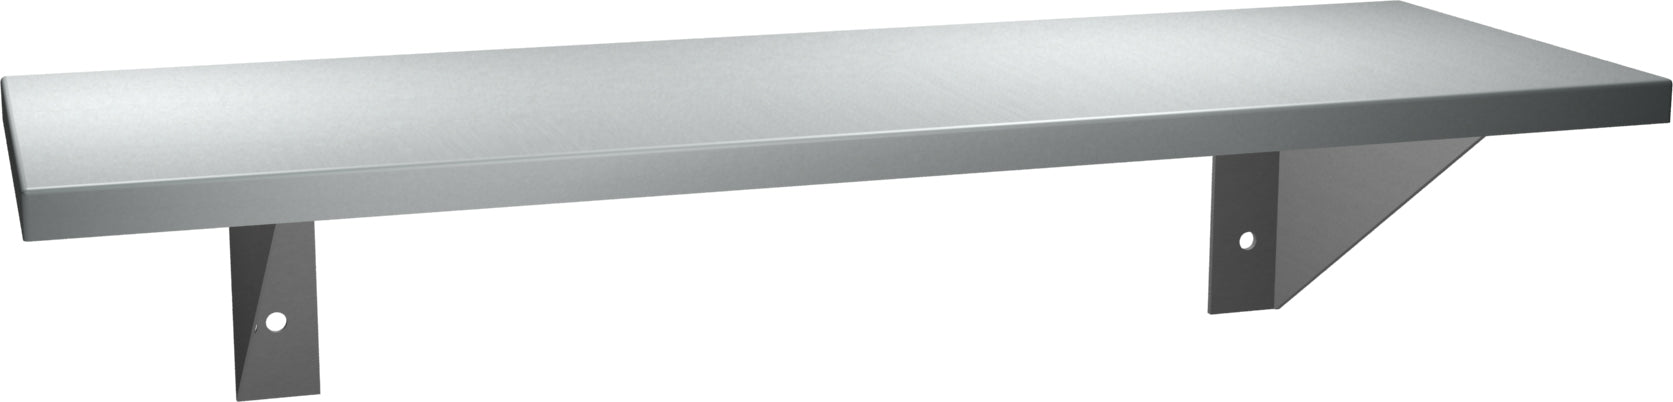 ASI 0692-530 Shelf, Stainless Steel, 5 X 30 Inch